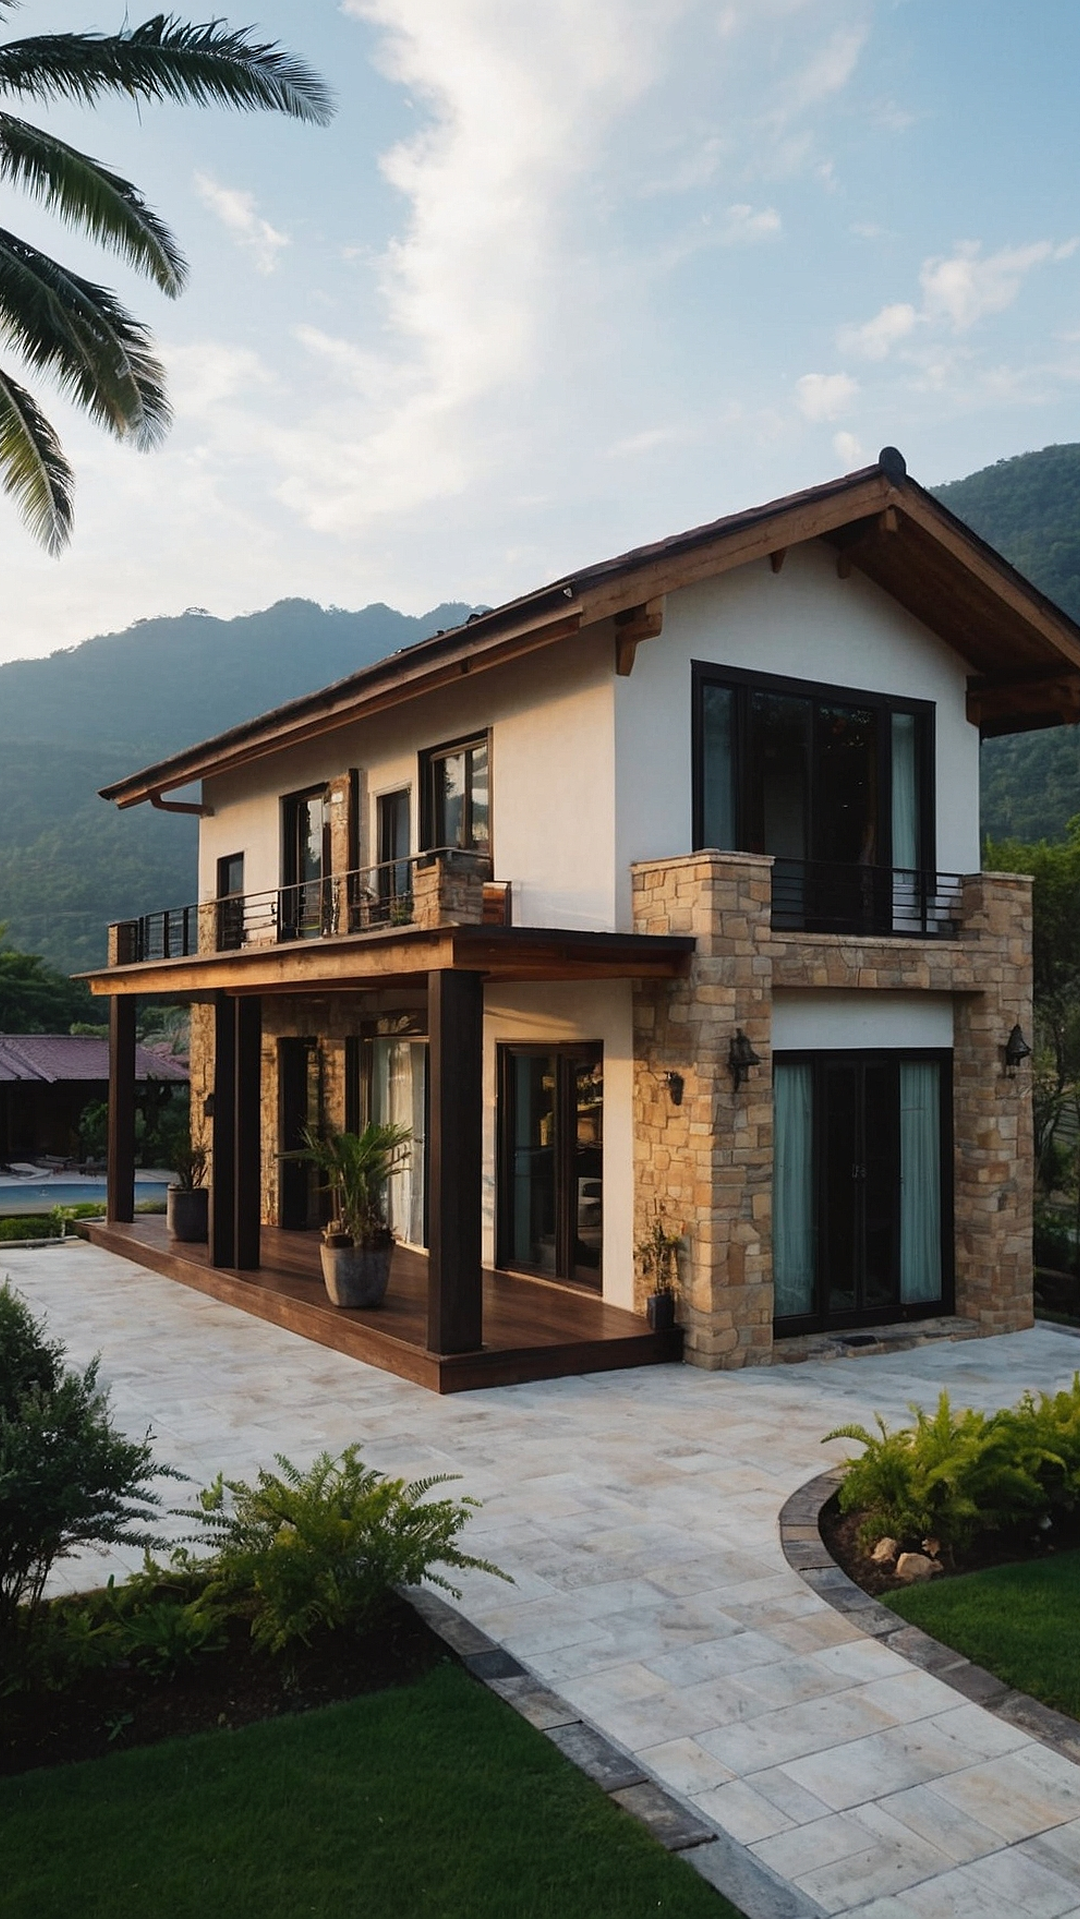 Country Living: Inspiring House Designs